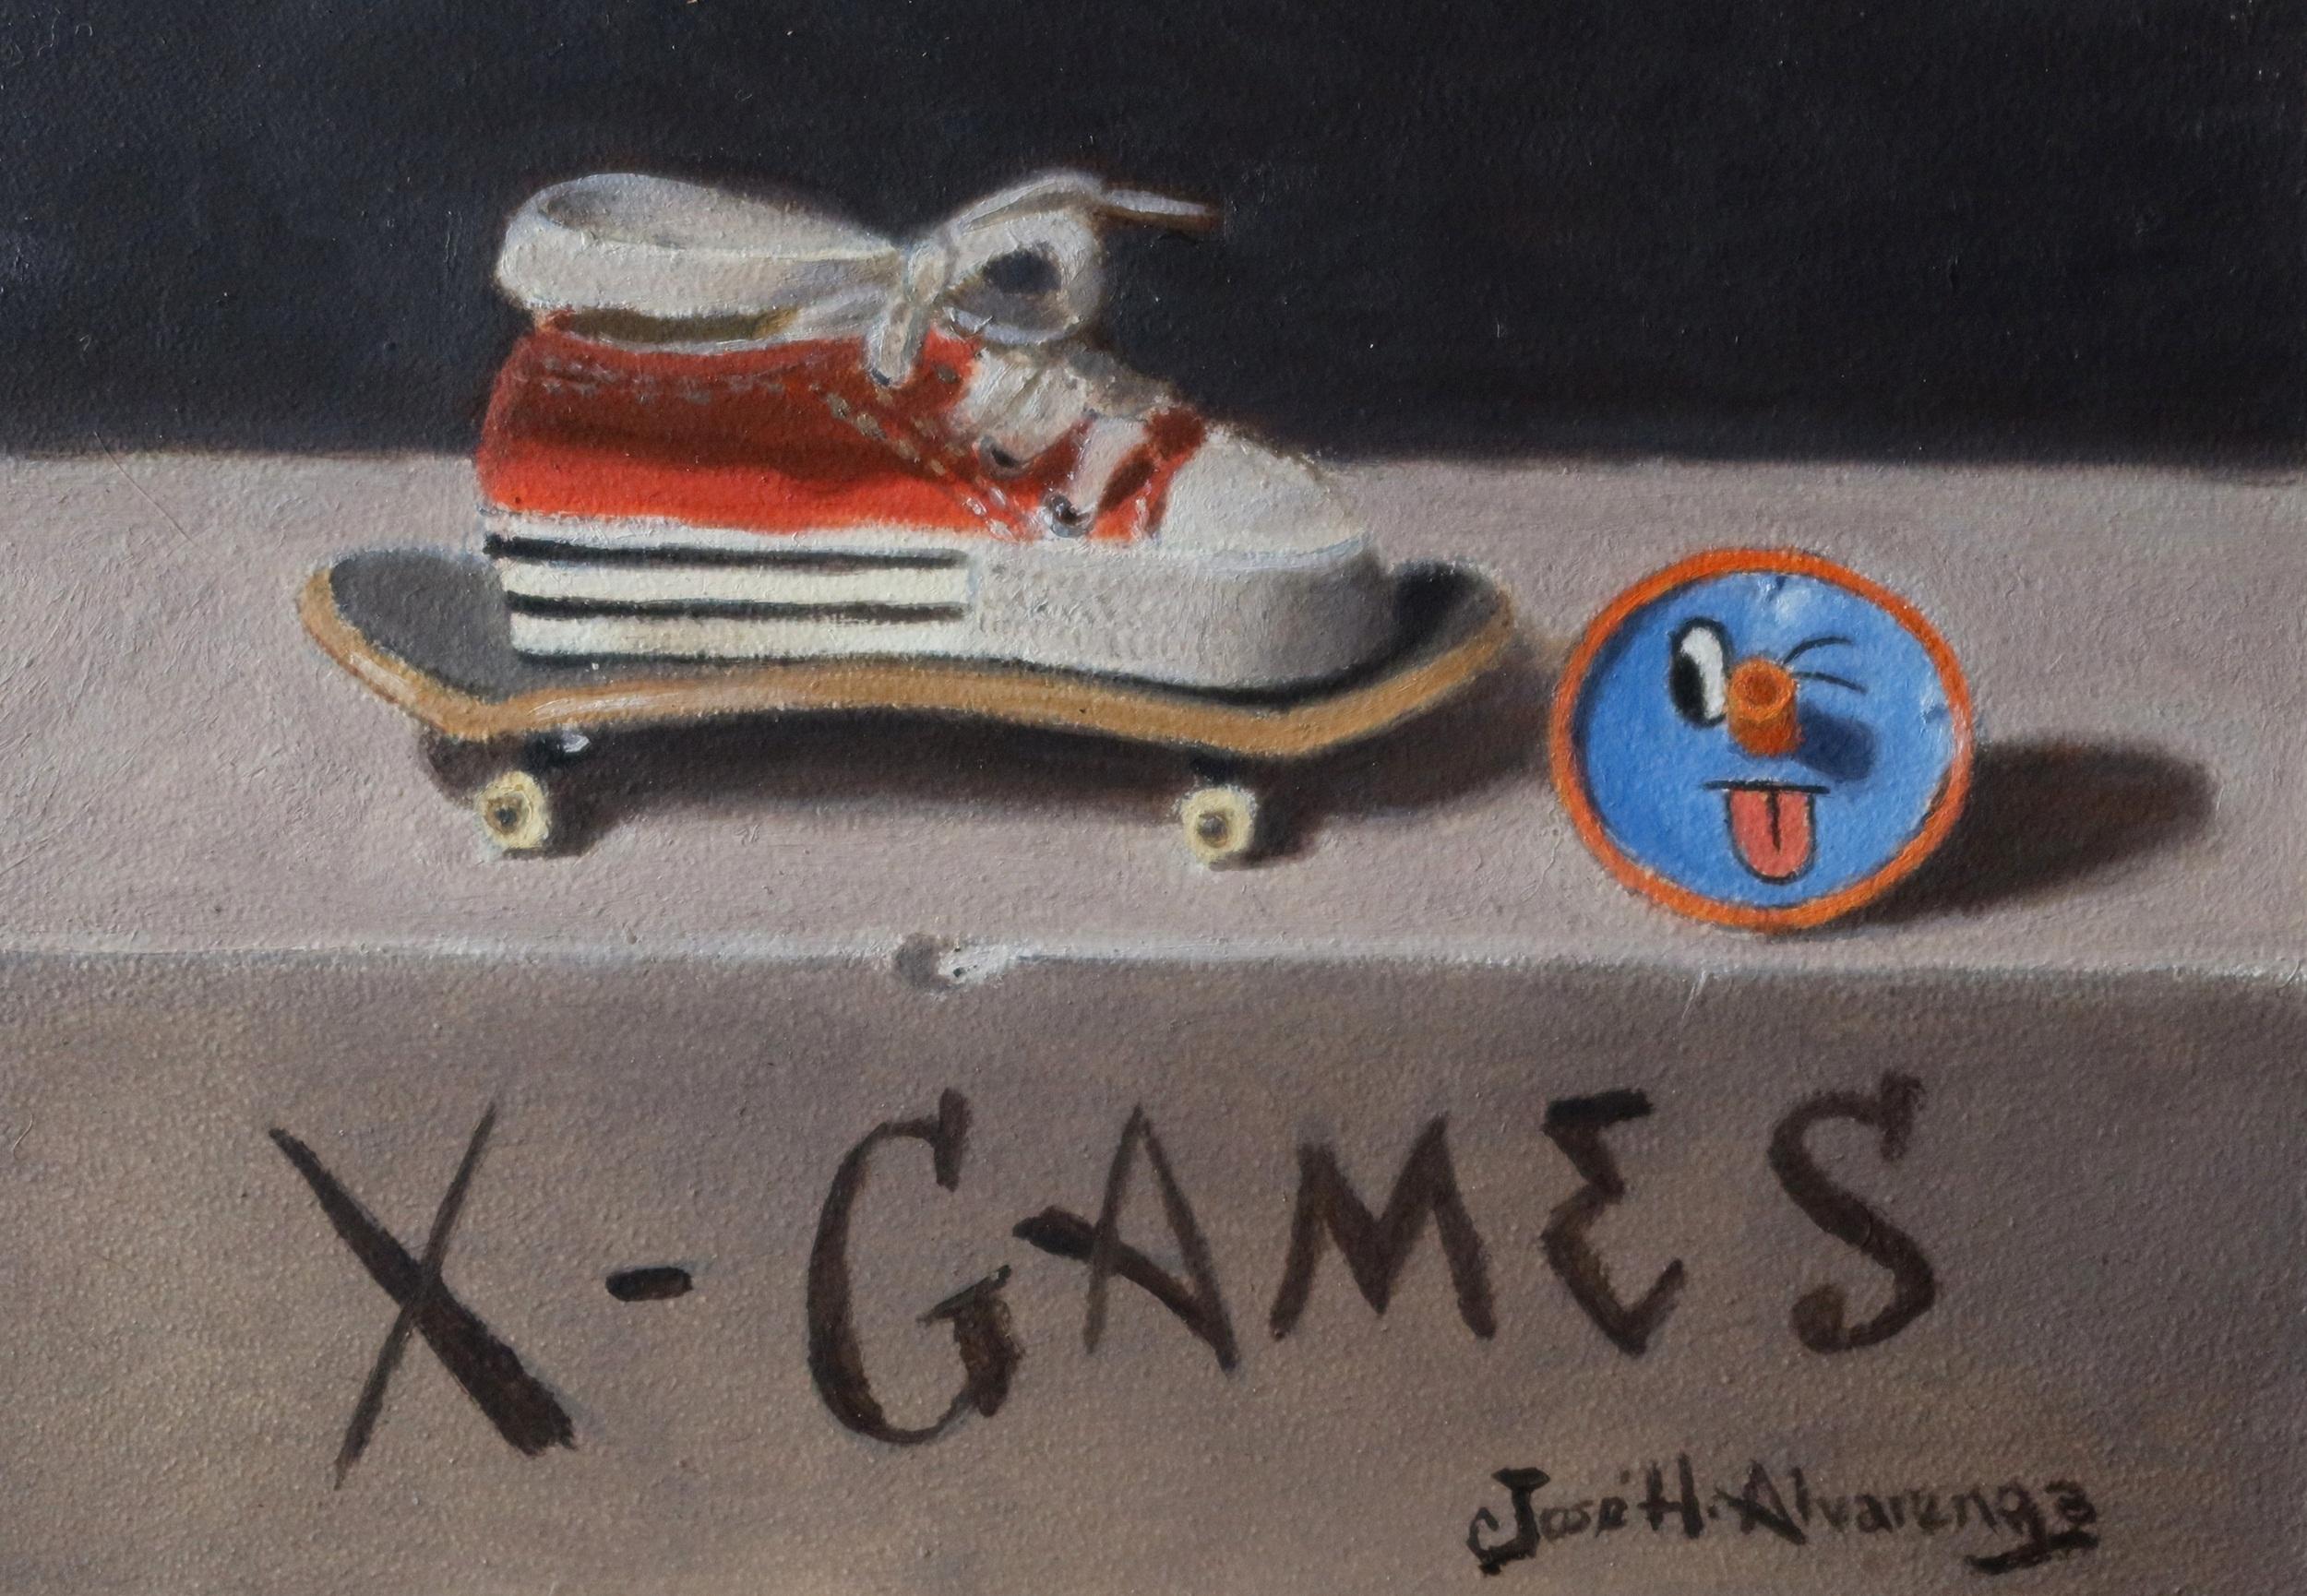 X Games, Oil Painting - Art by Jose H. Alvarenga